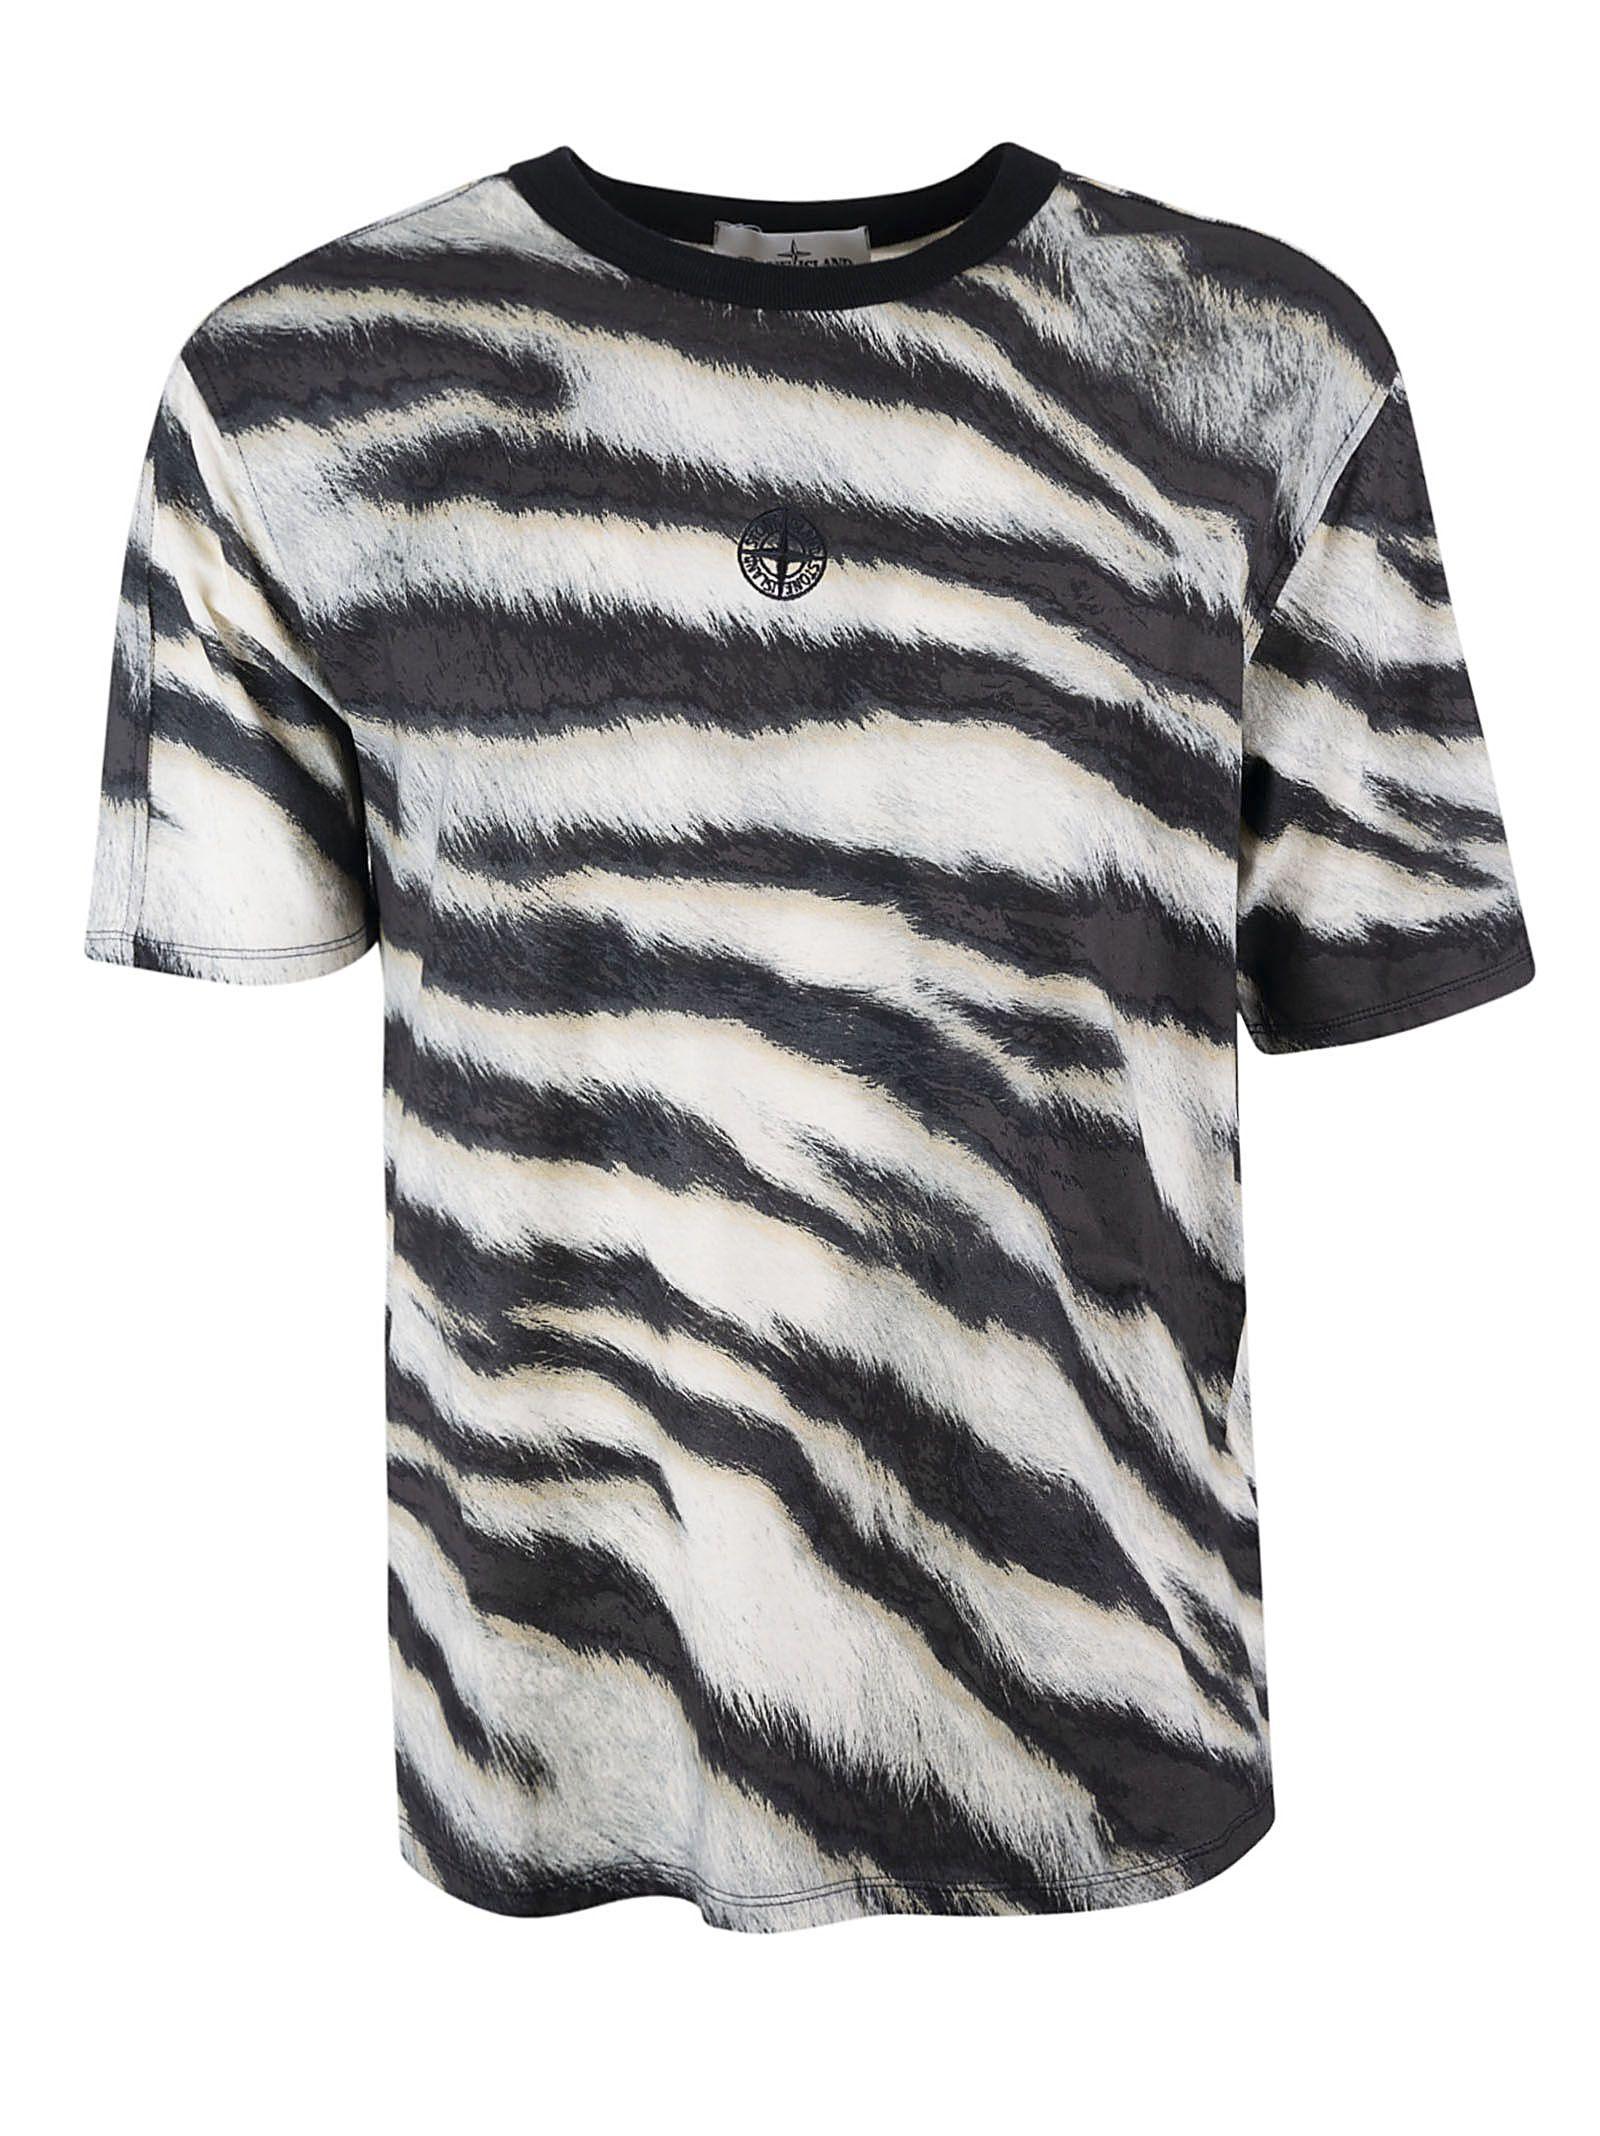 Stone Island Zebra T Shirt Hot Sale, 51% OFF | www.colegiogamarra.com